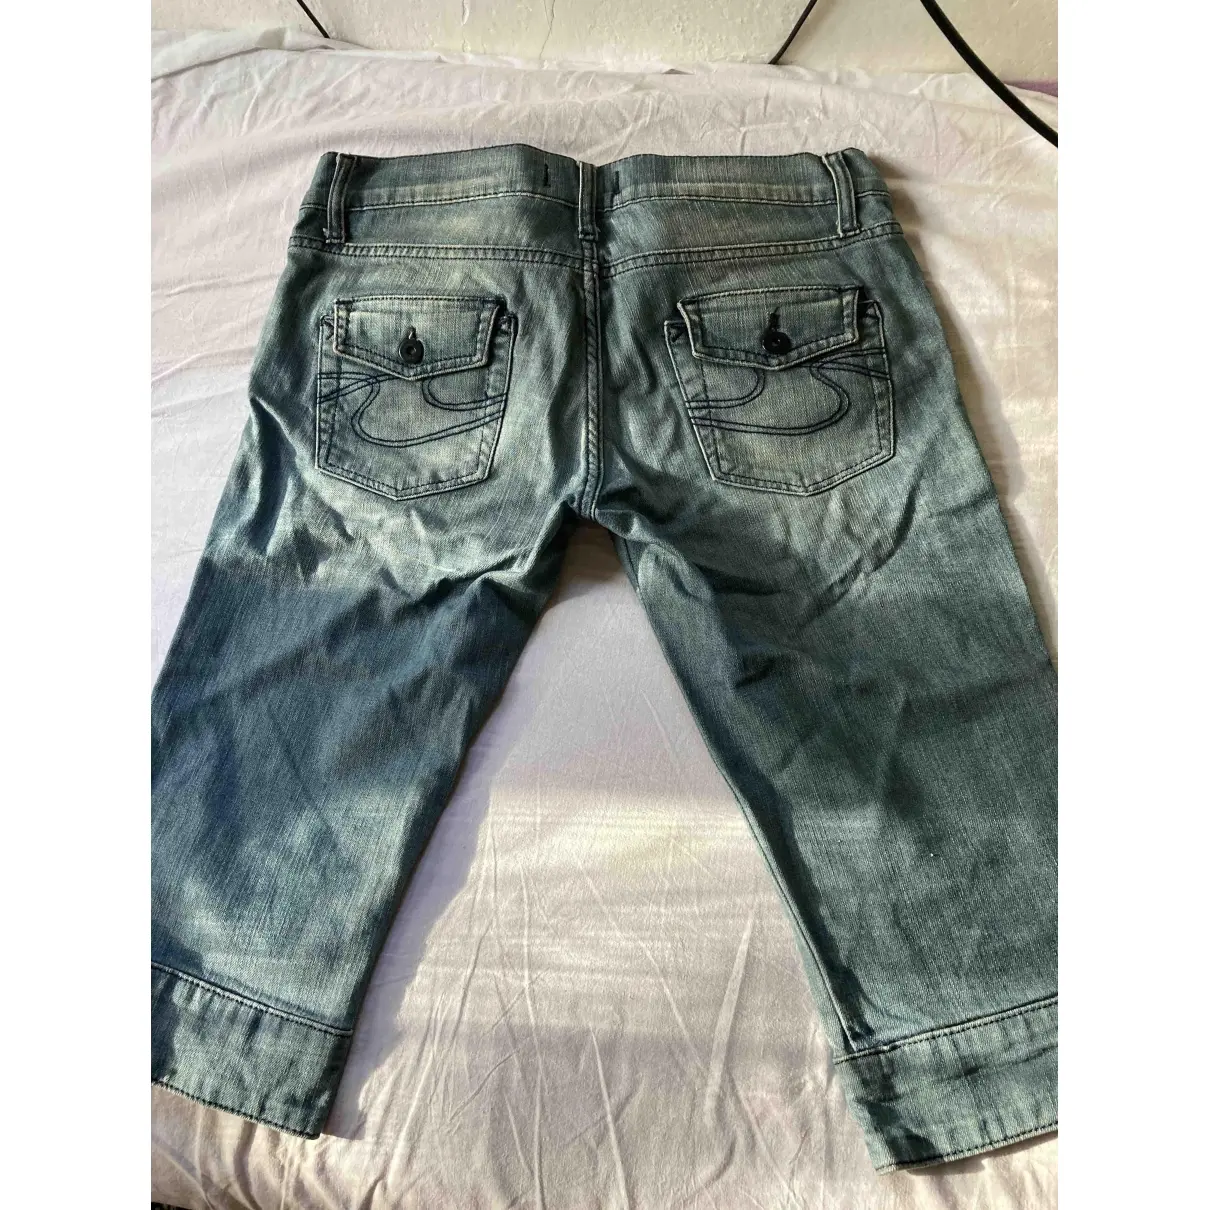 Buy Guy Laroche Slim jeans online